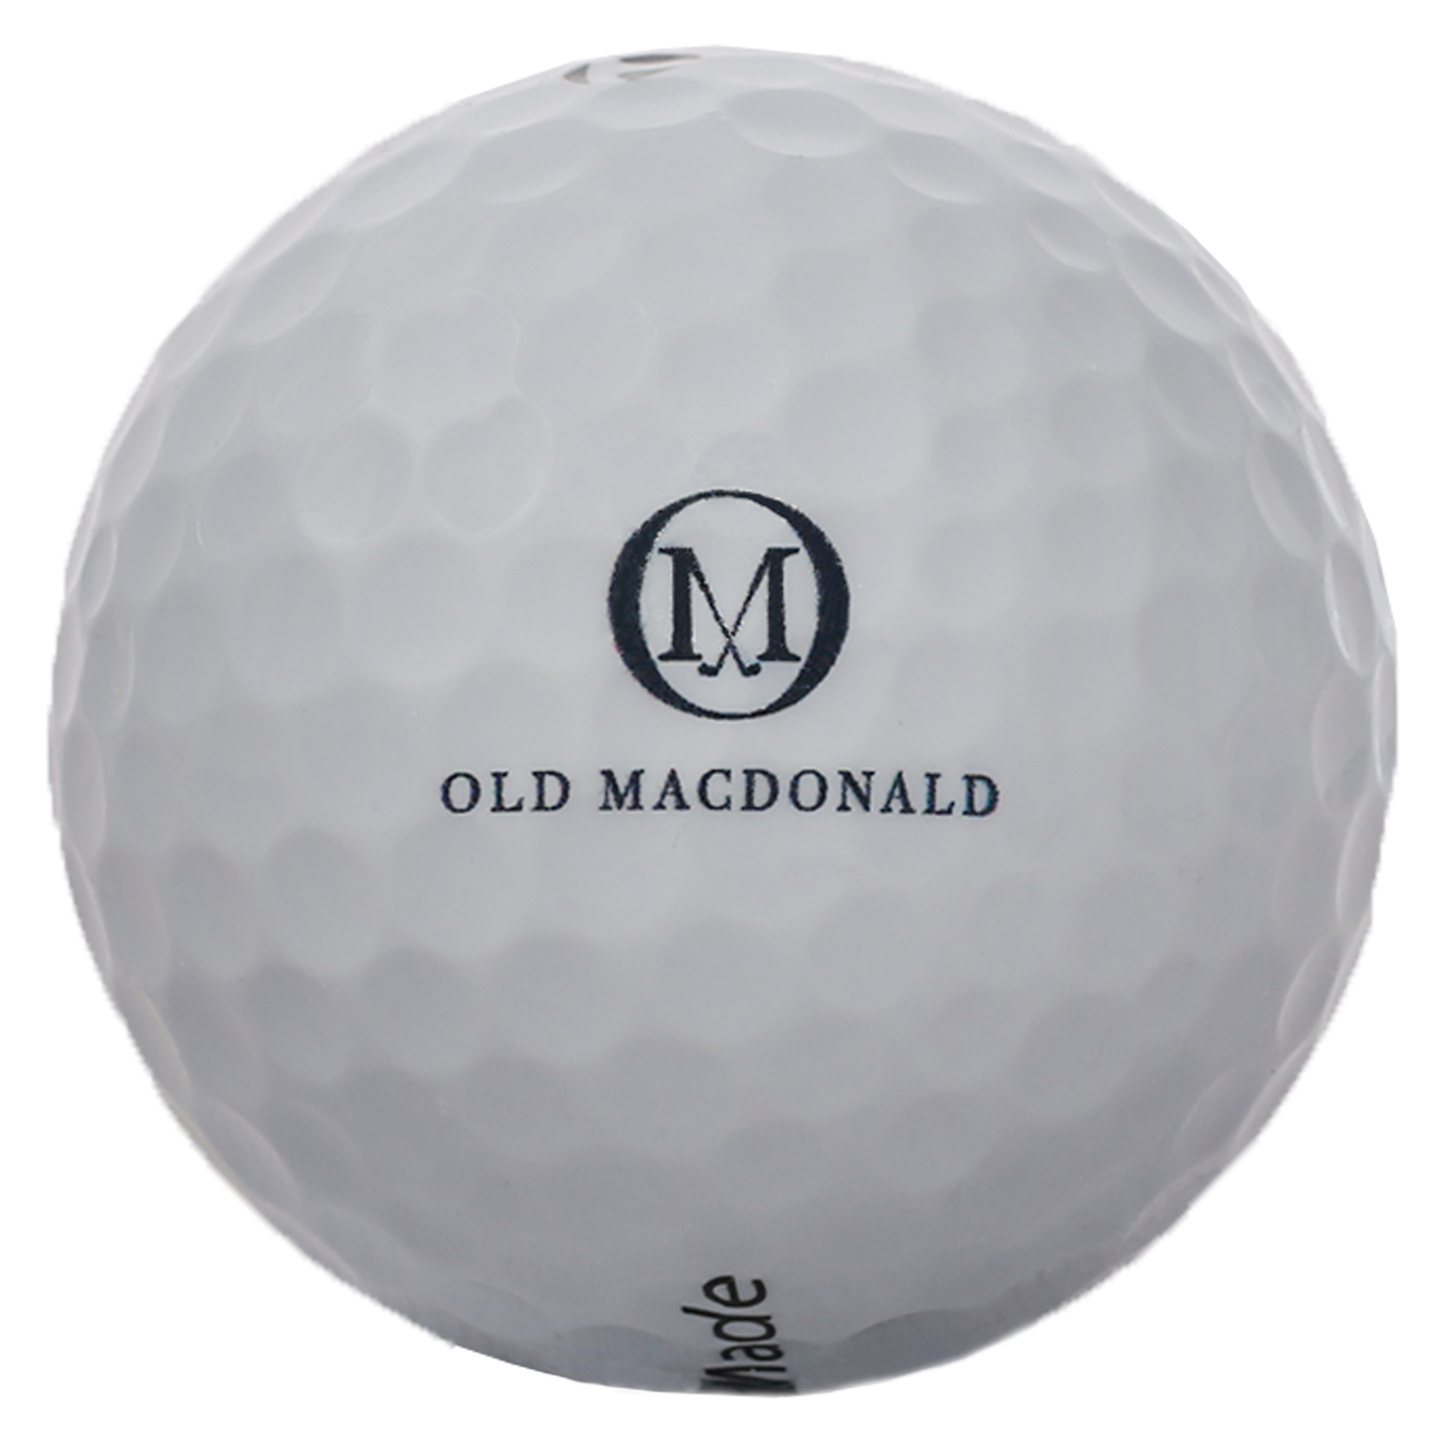 Golf Balls -  Choose From Six Course Logos